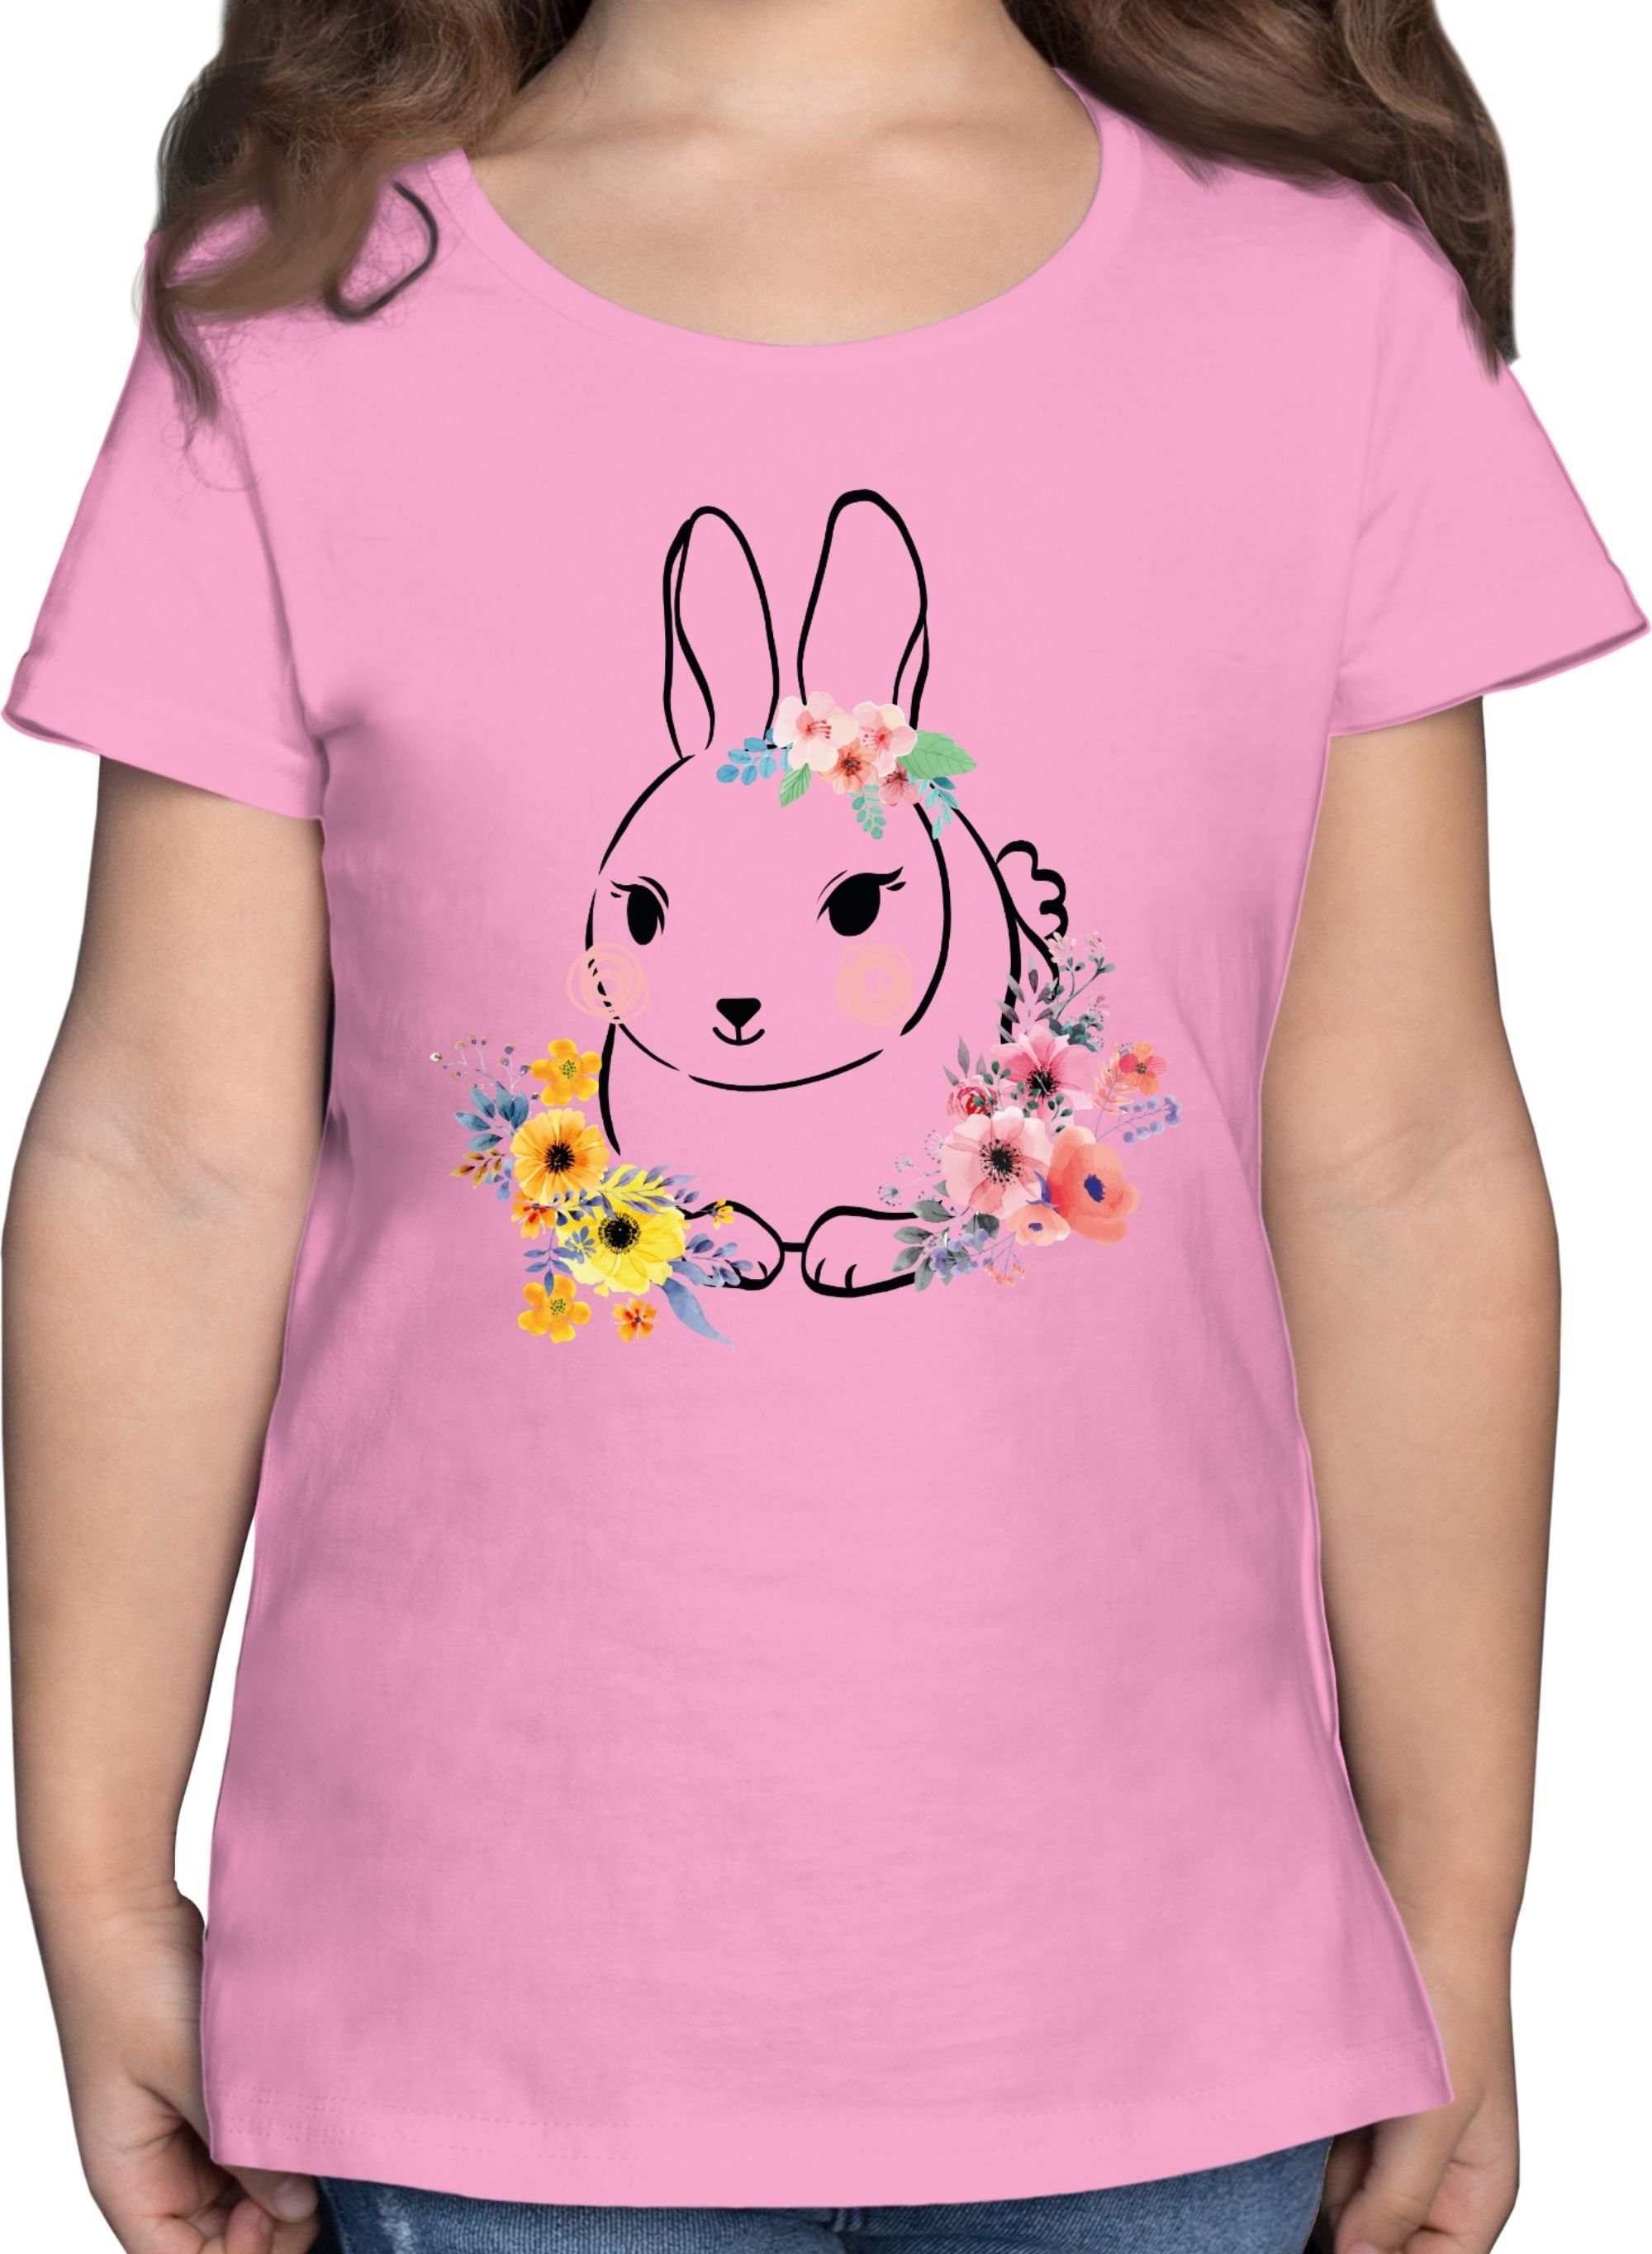 100 % authentisch garantiert Shirtracer T-Shirt Geschenk Ostern - Rosa 3 Blumen Hase